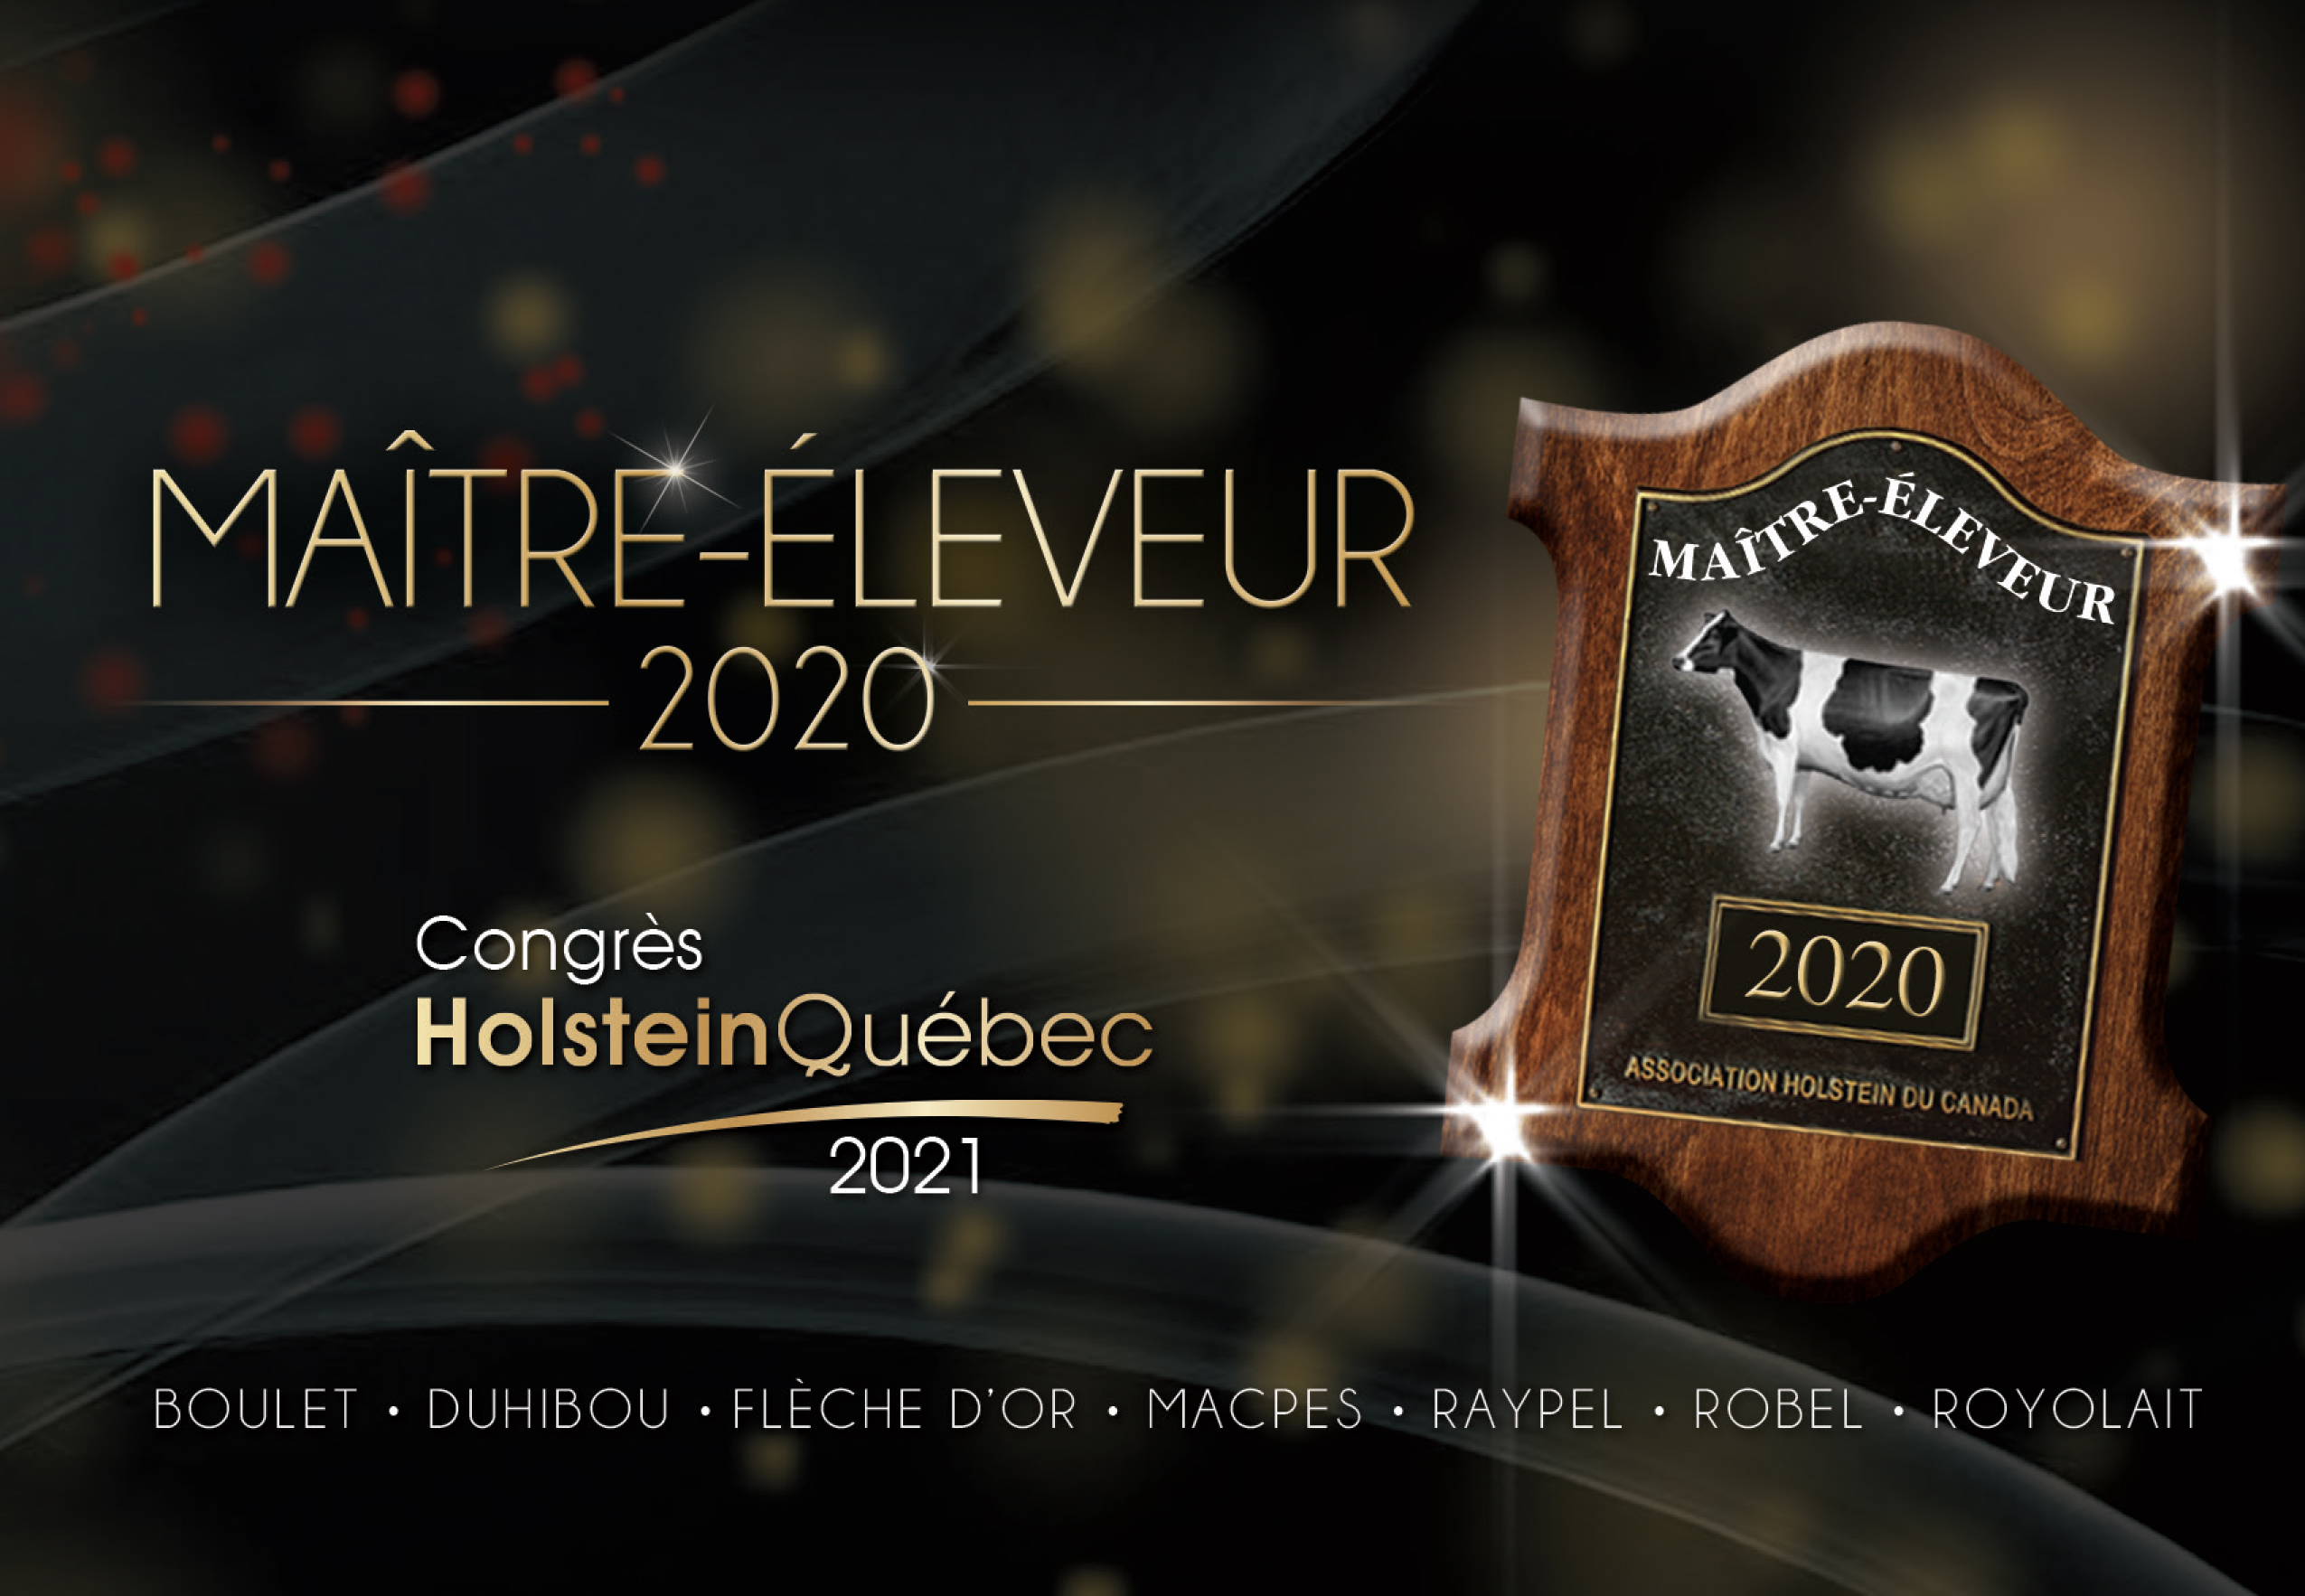 Congrès Holstein Québec 2021